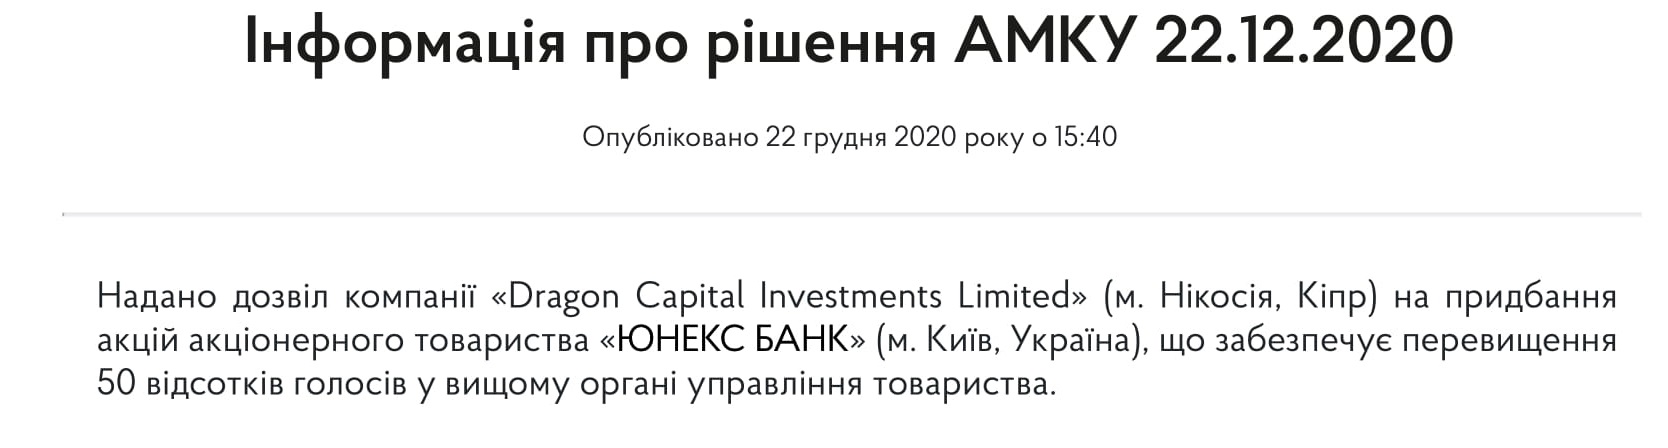 Dragon Capital покупает банк Новинского. Скриншот: АМКУ